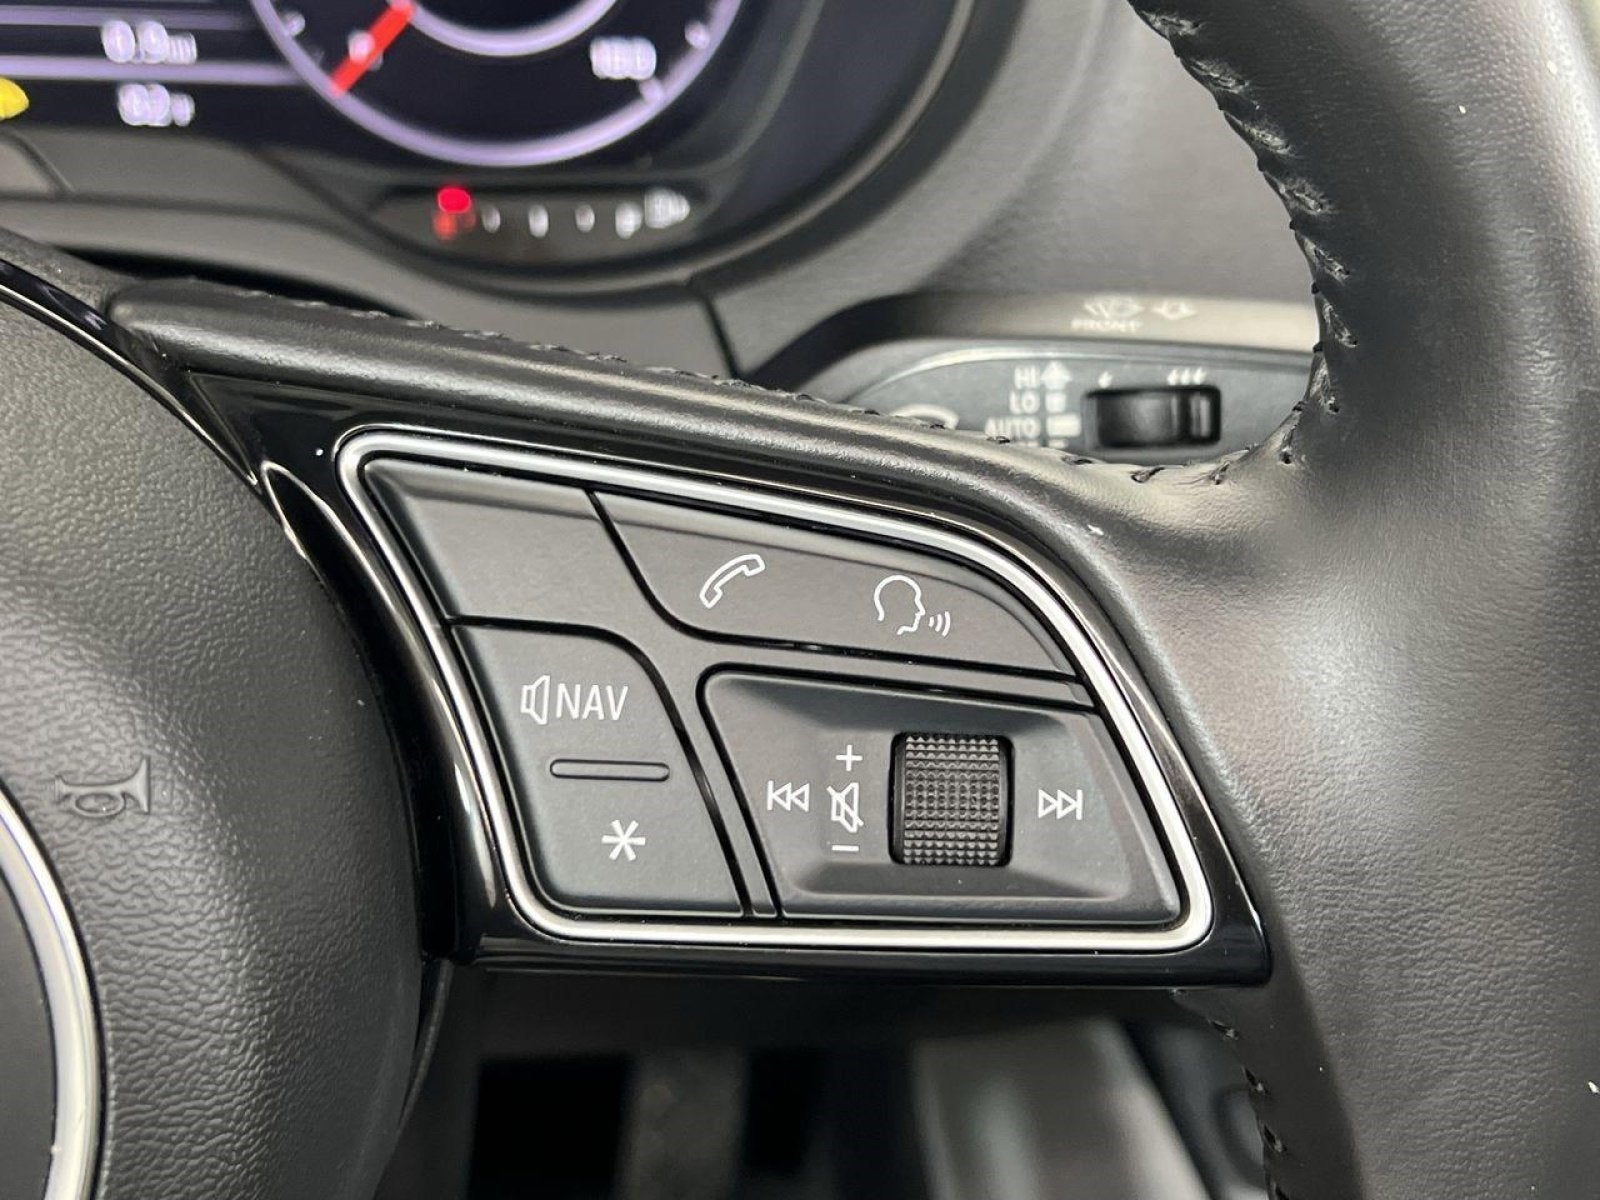 2018 Audi A3 2.0T Premium